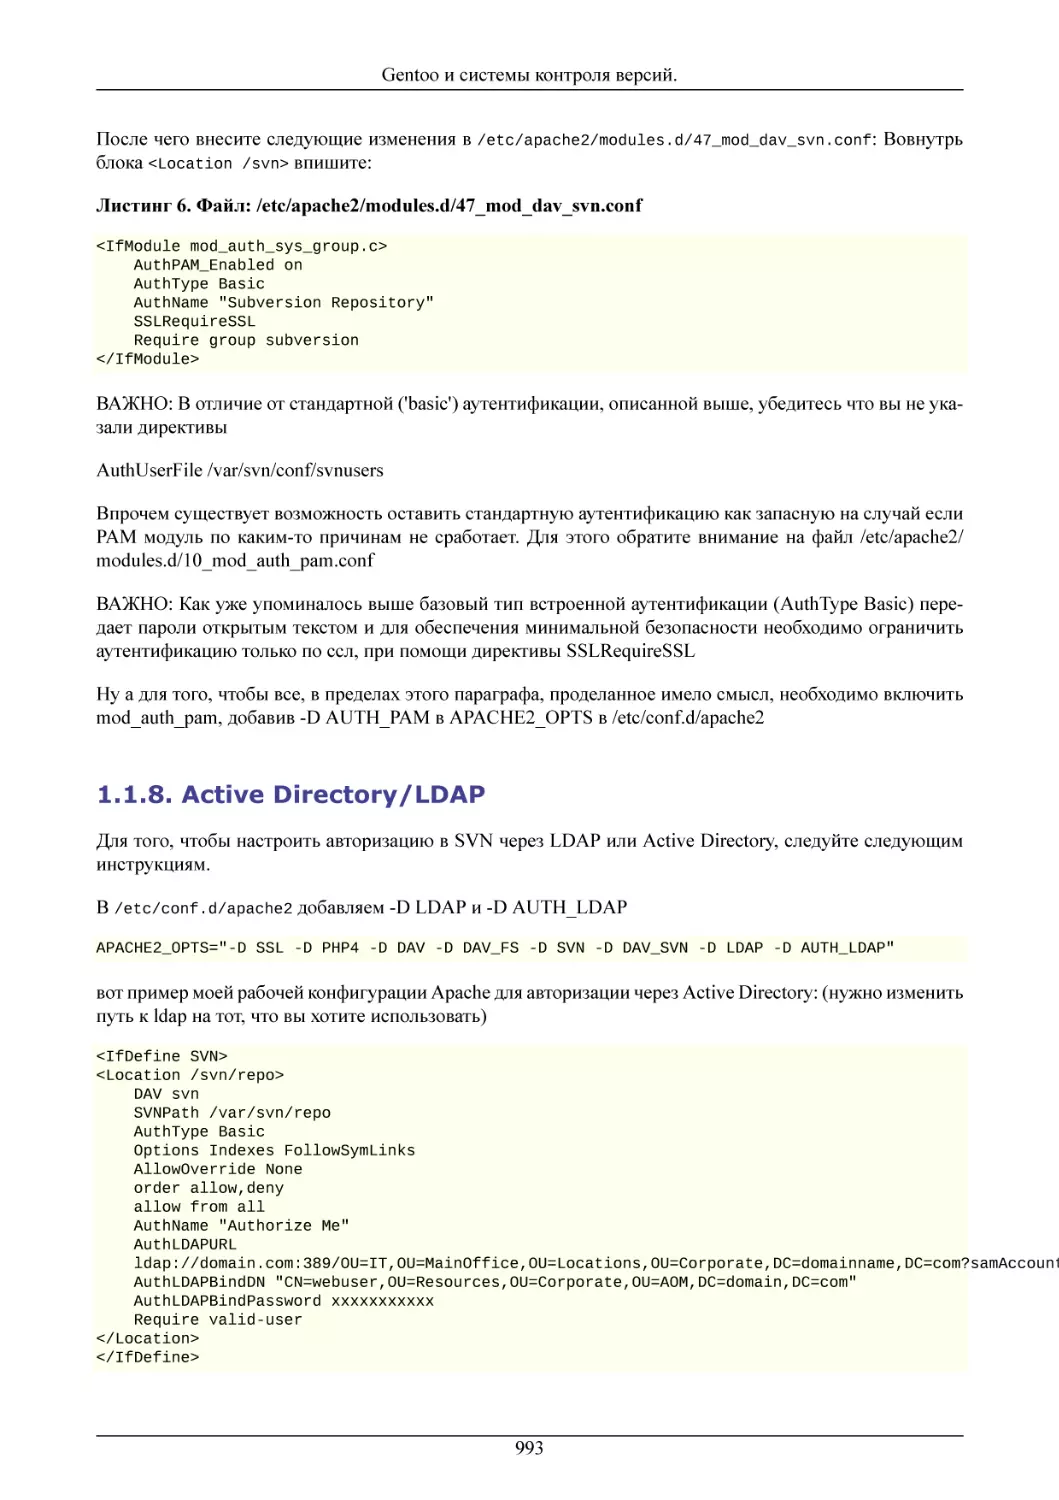 Active Directory/LDAP